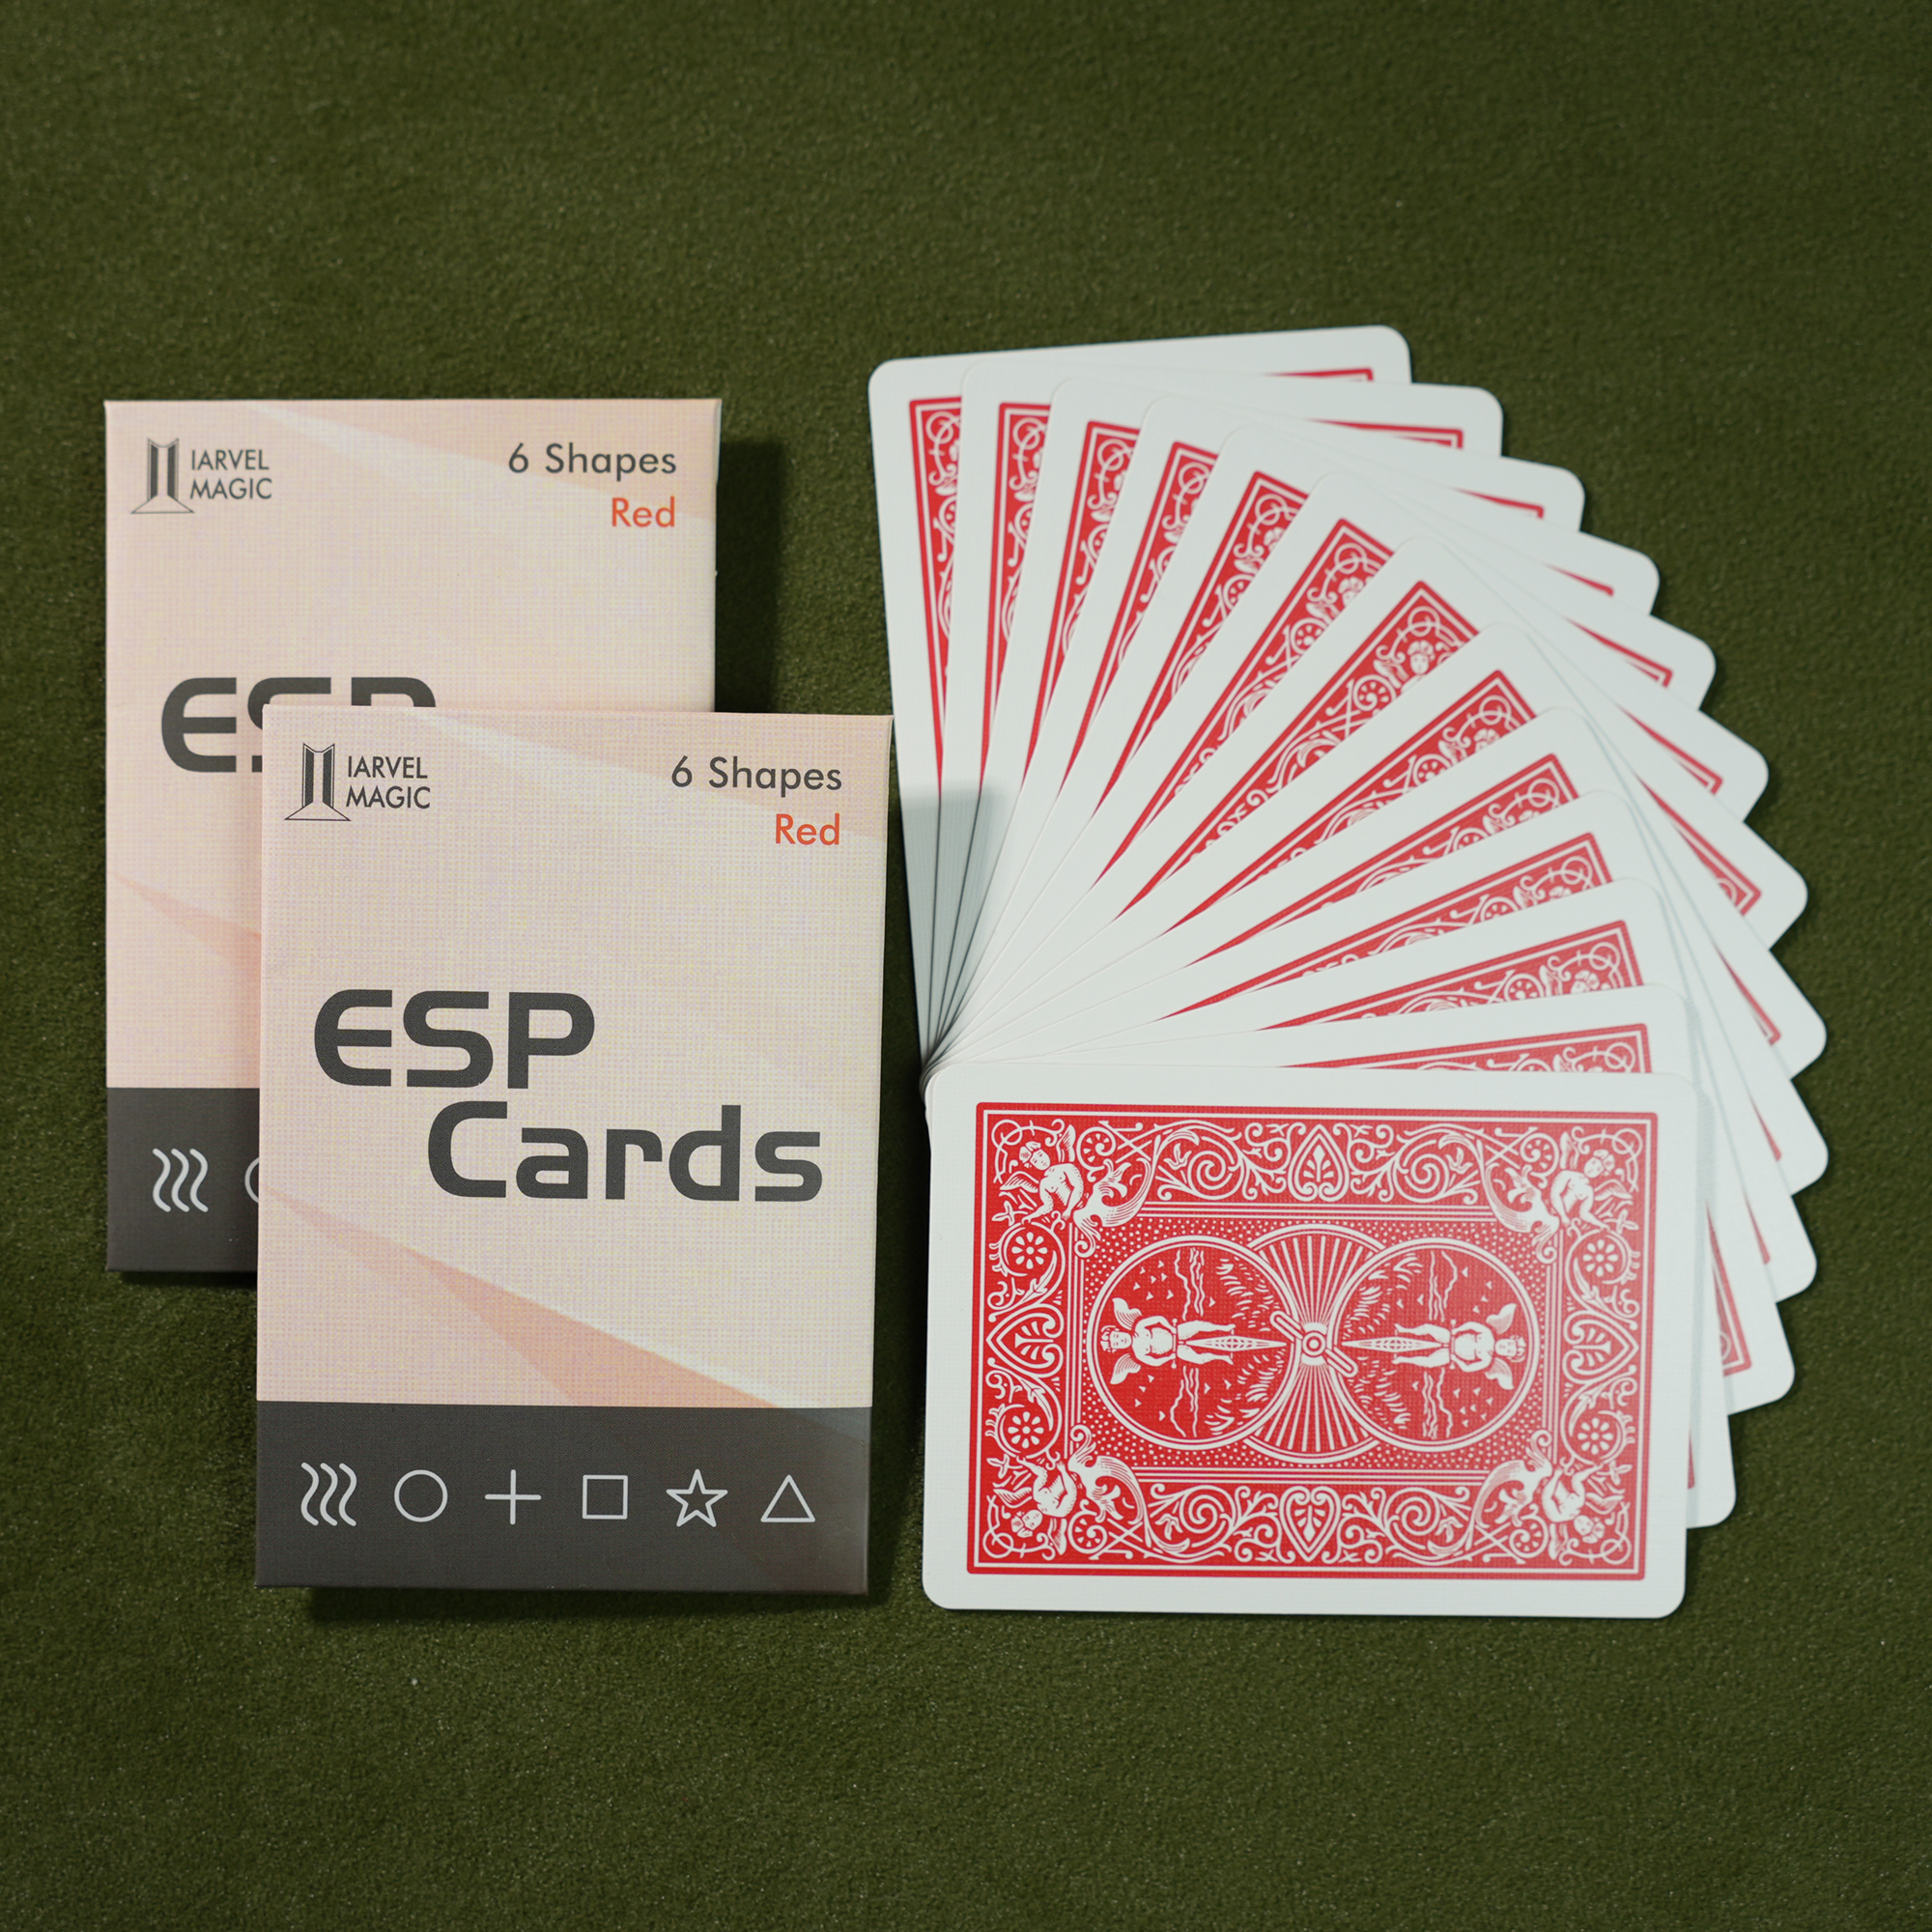 ESP Cards